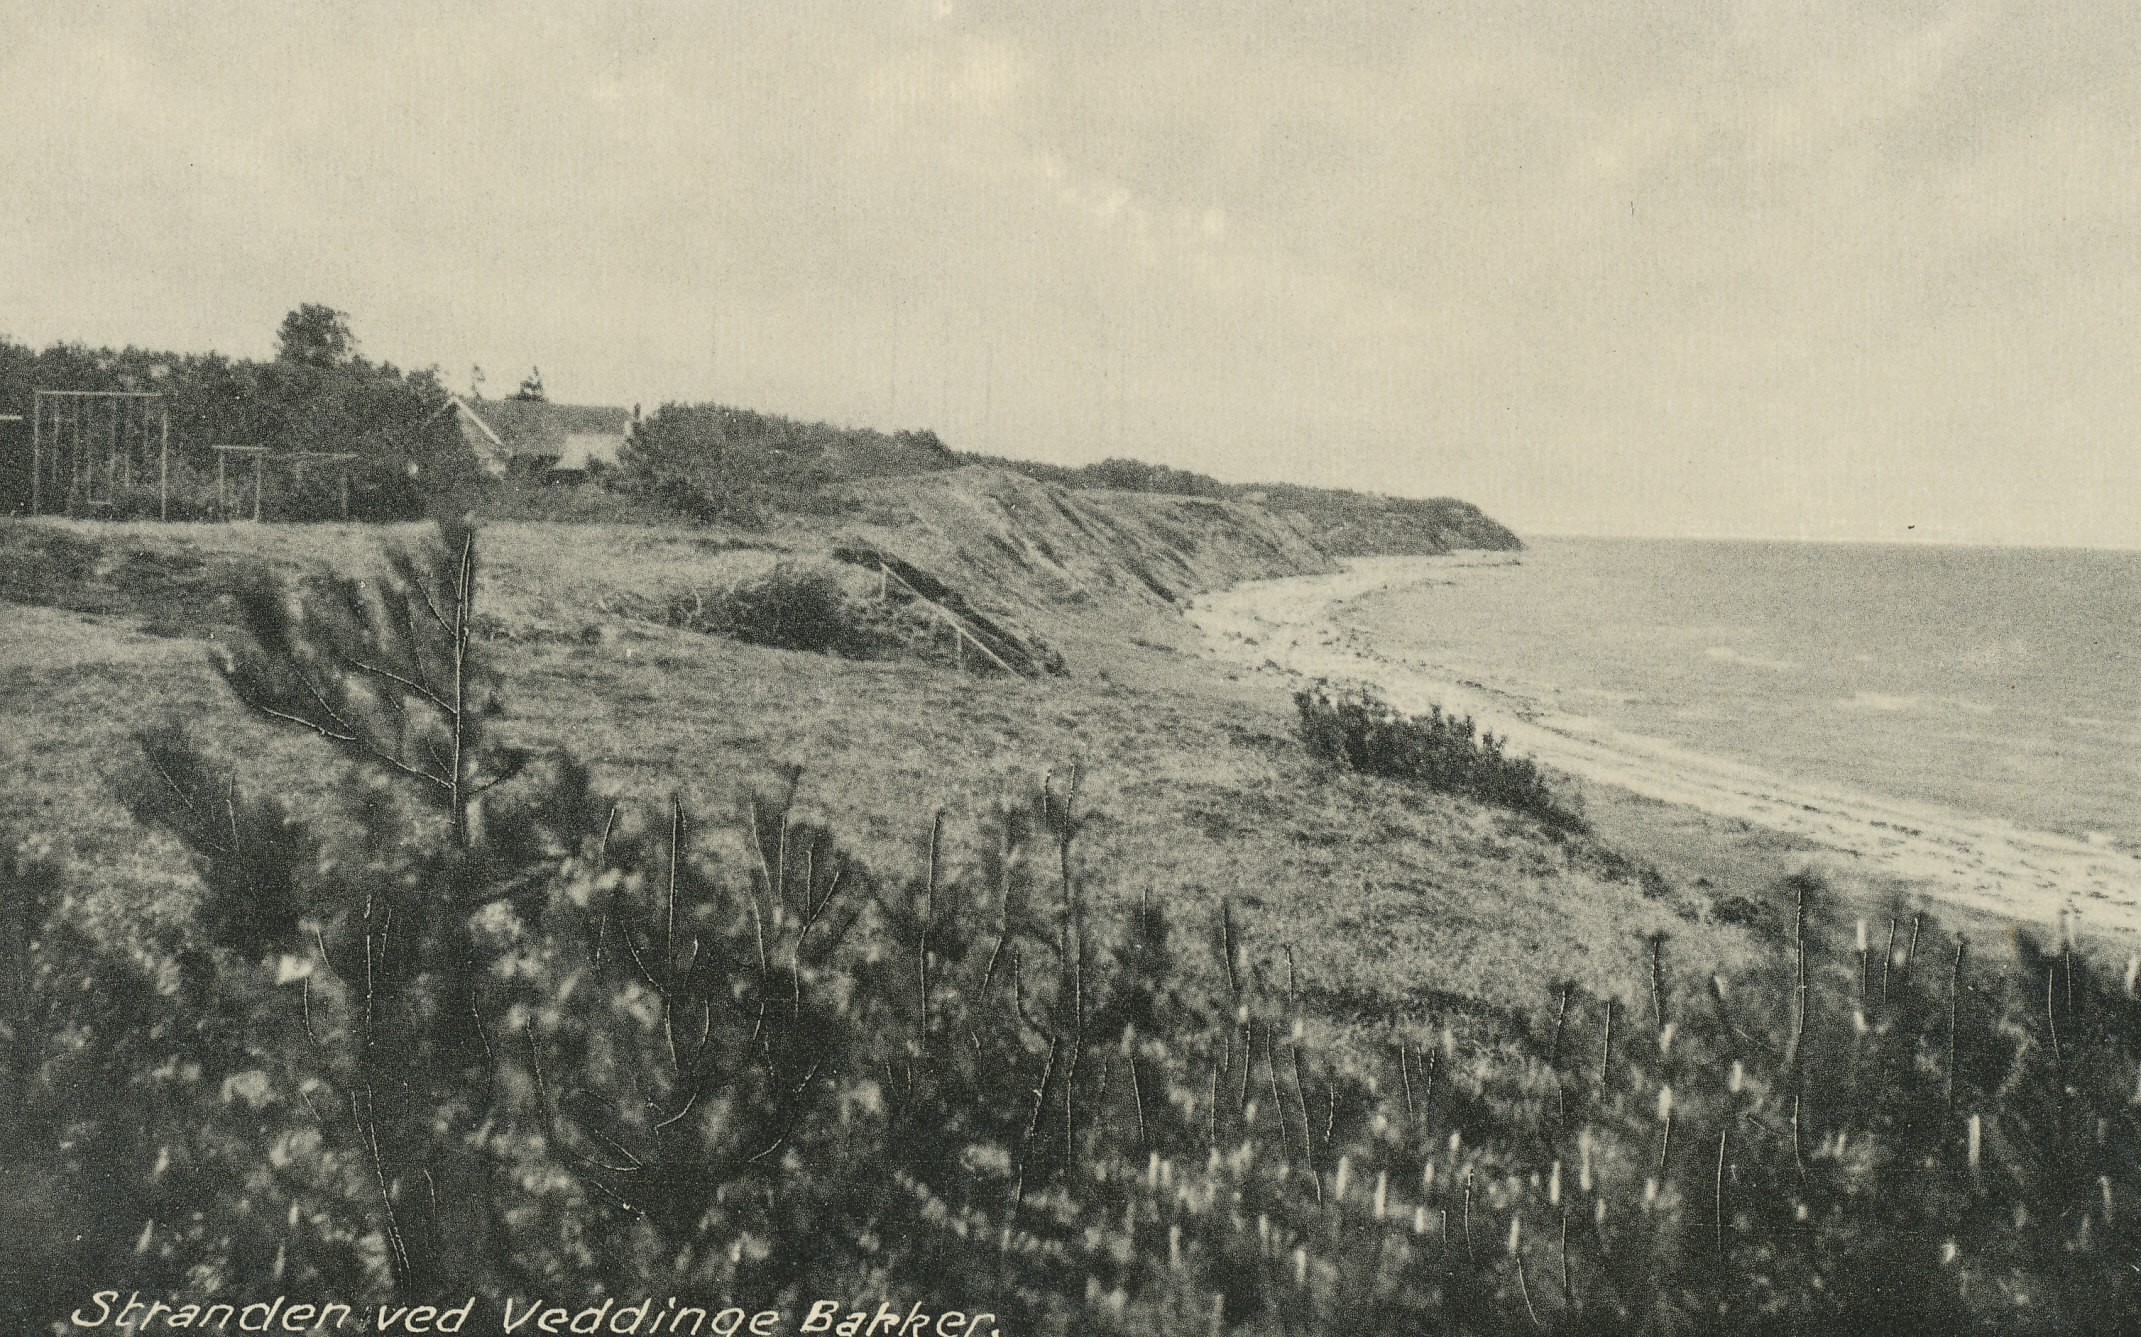 Stranden ved Veddinge Bakker, ca. 1940 (B2340)